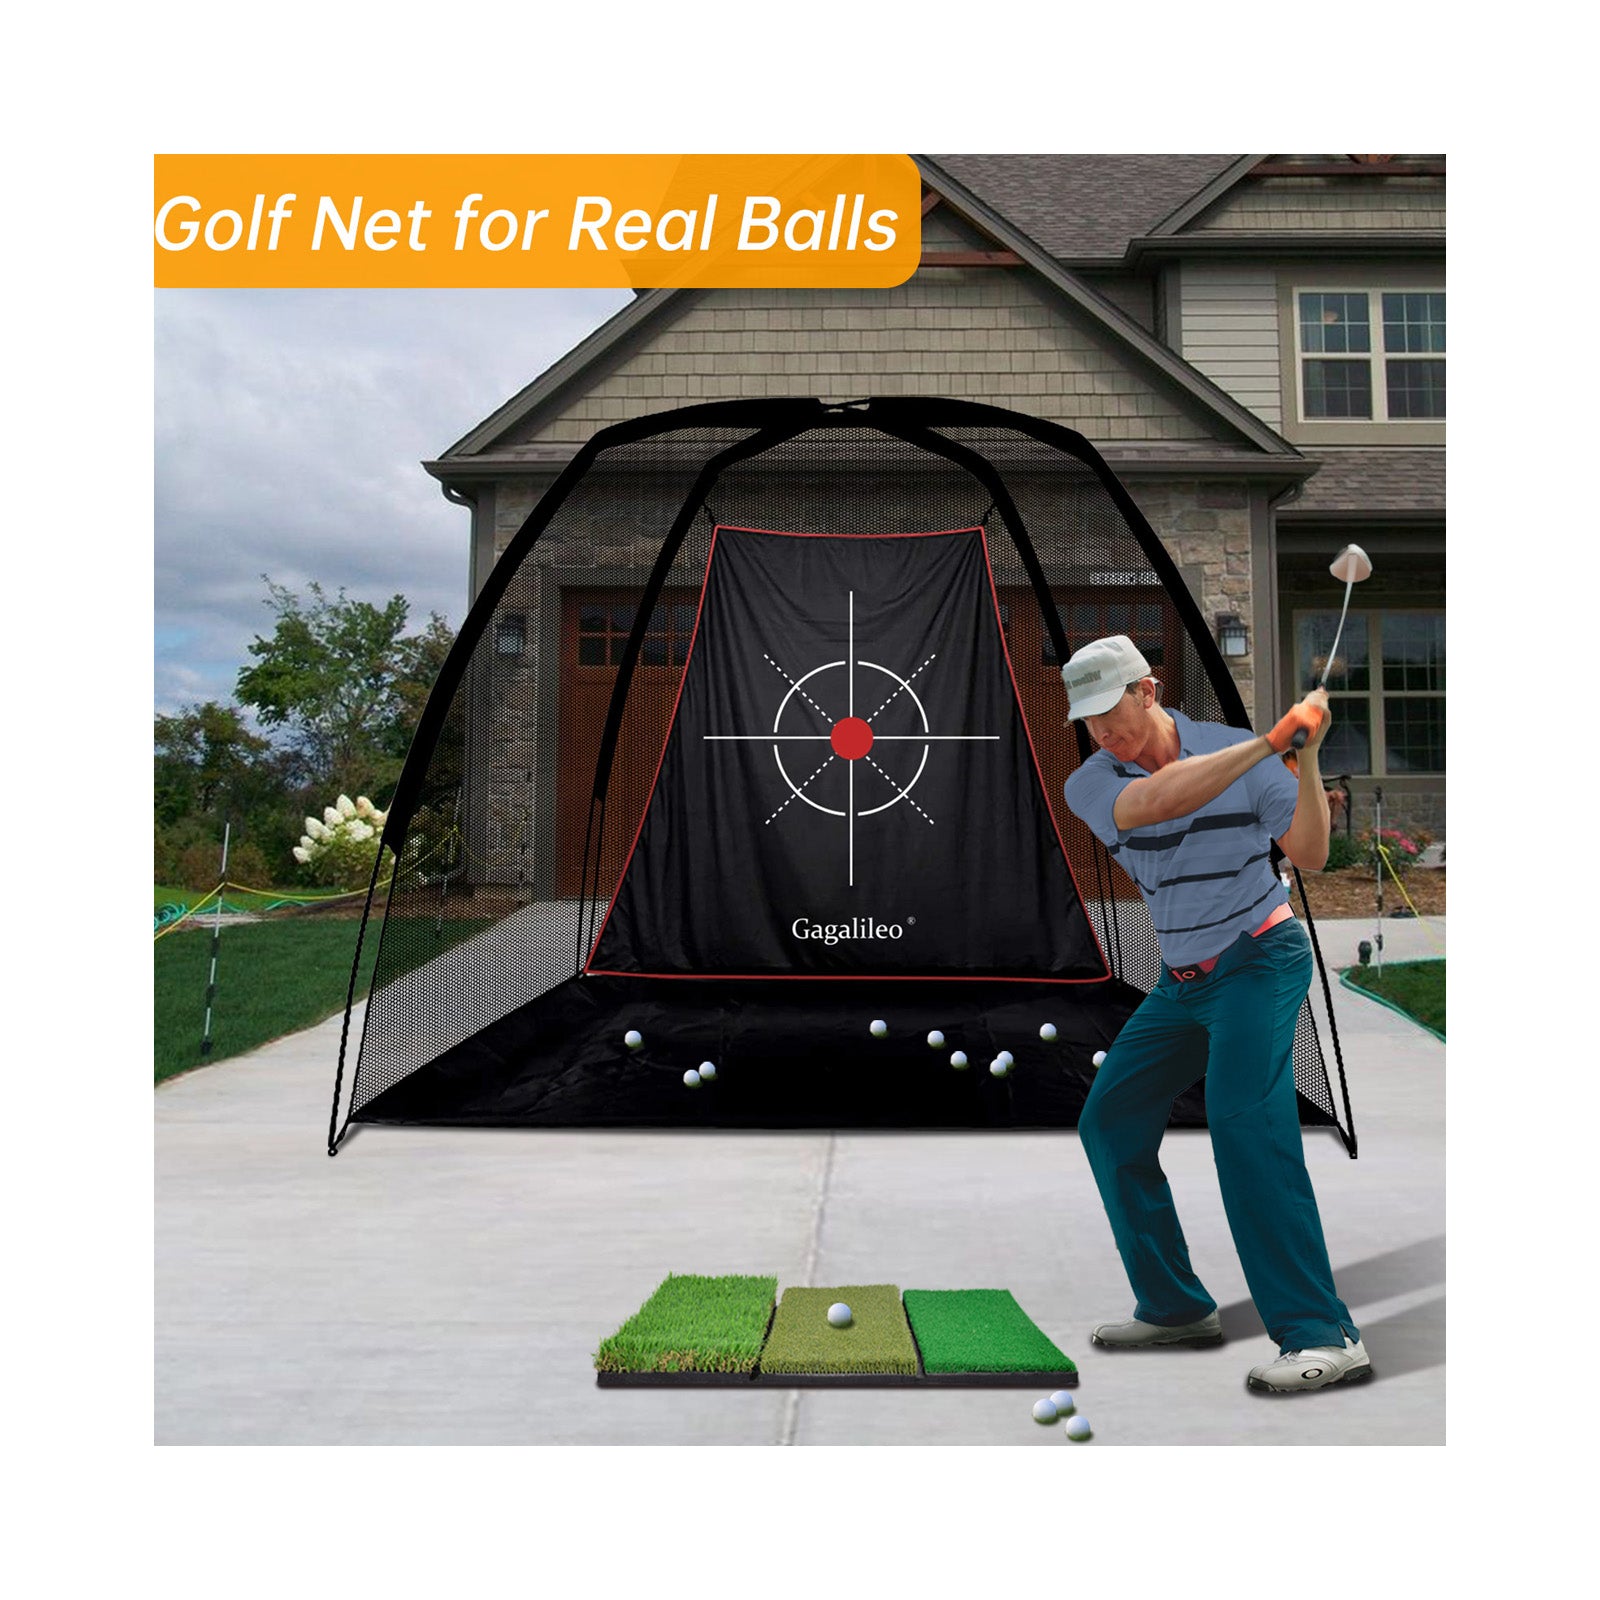 Red de golf Galileo de 8'X 6'X 5' para redes de golf de patio trasero para uso en interiores